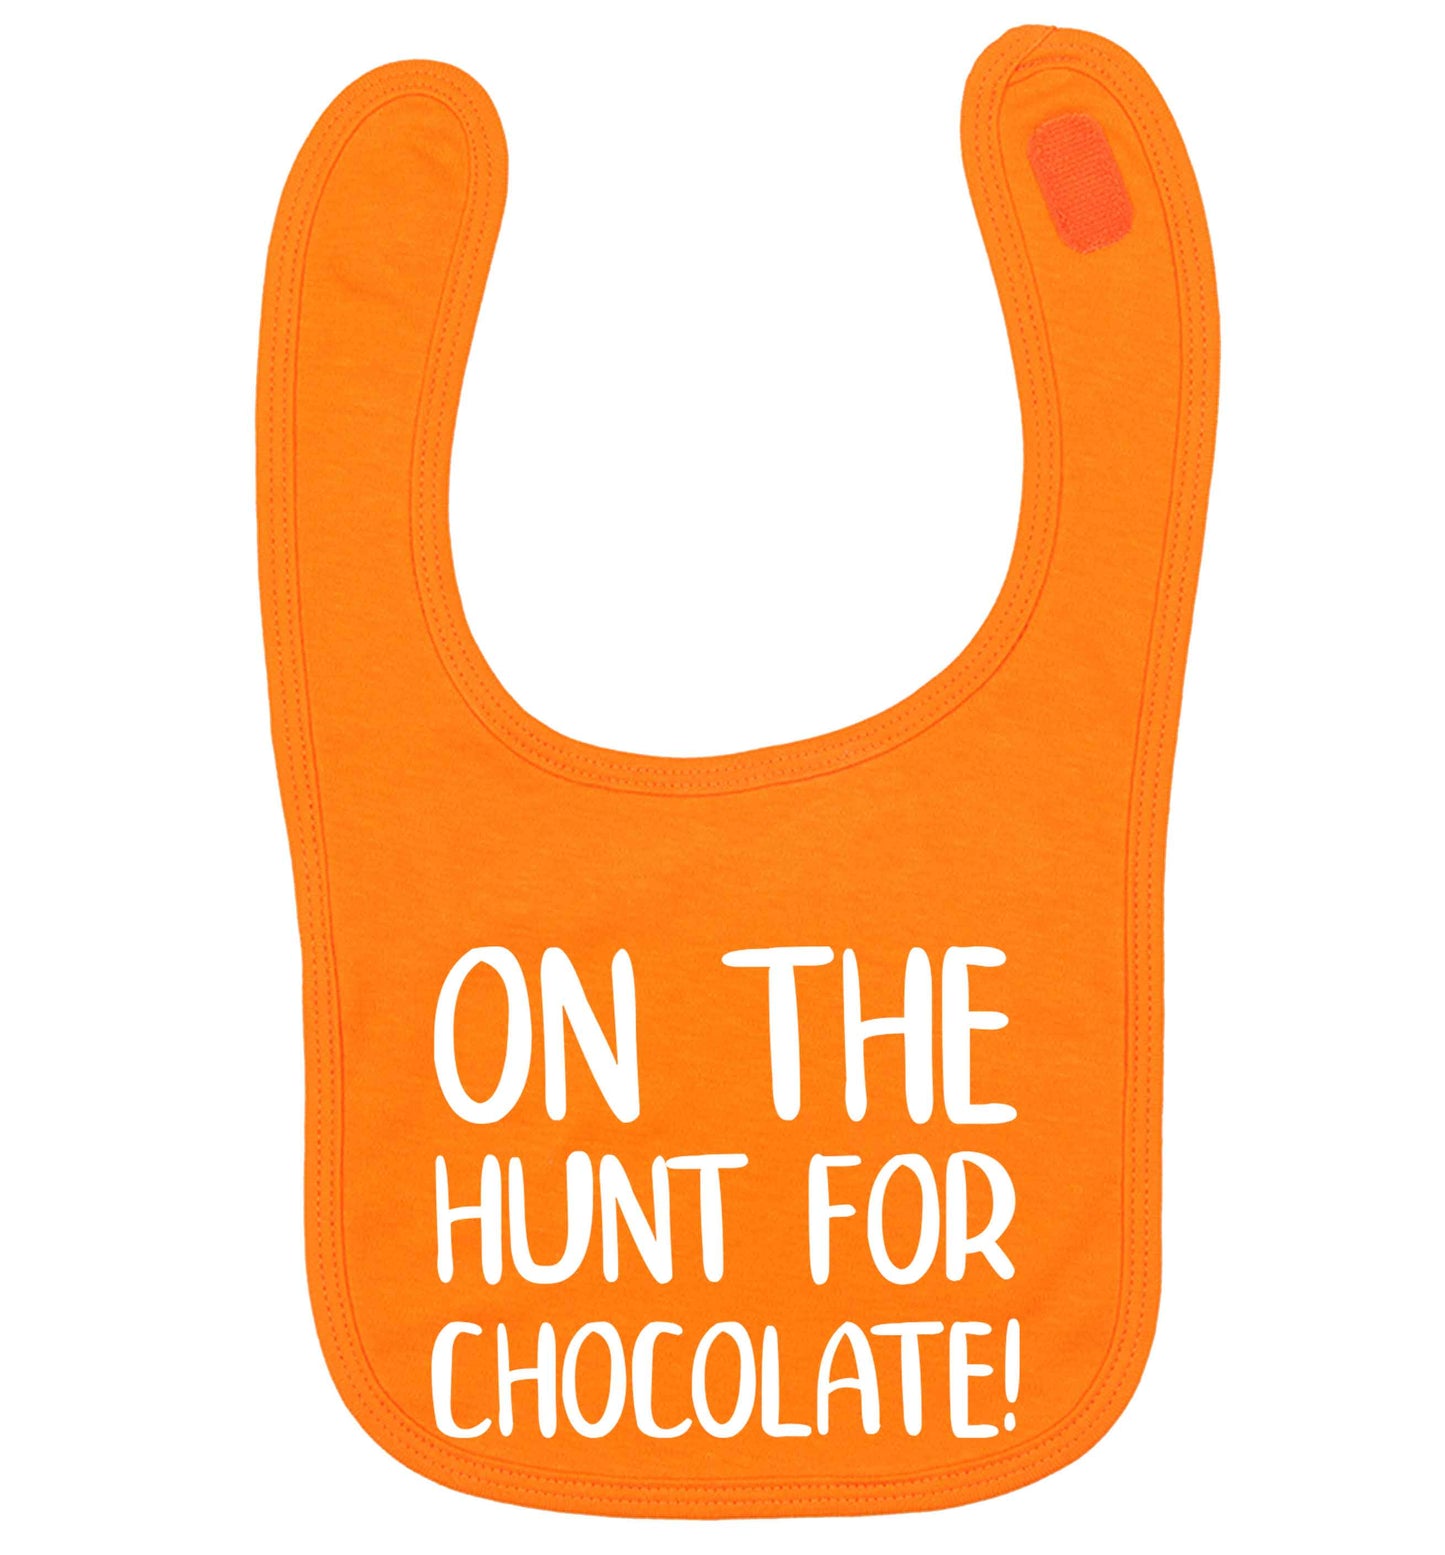 On the hunt for chocolate! orange baby bib